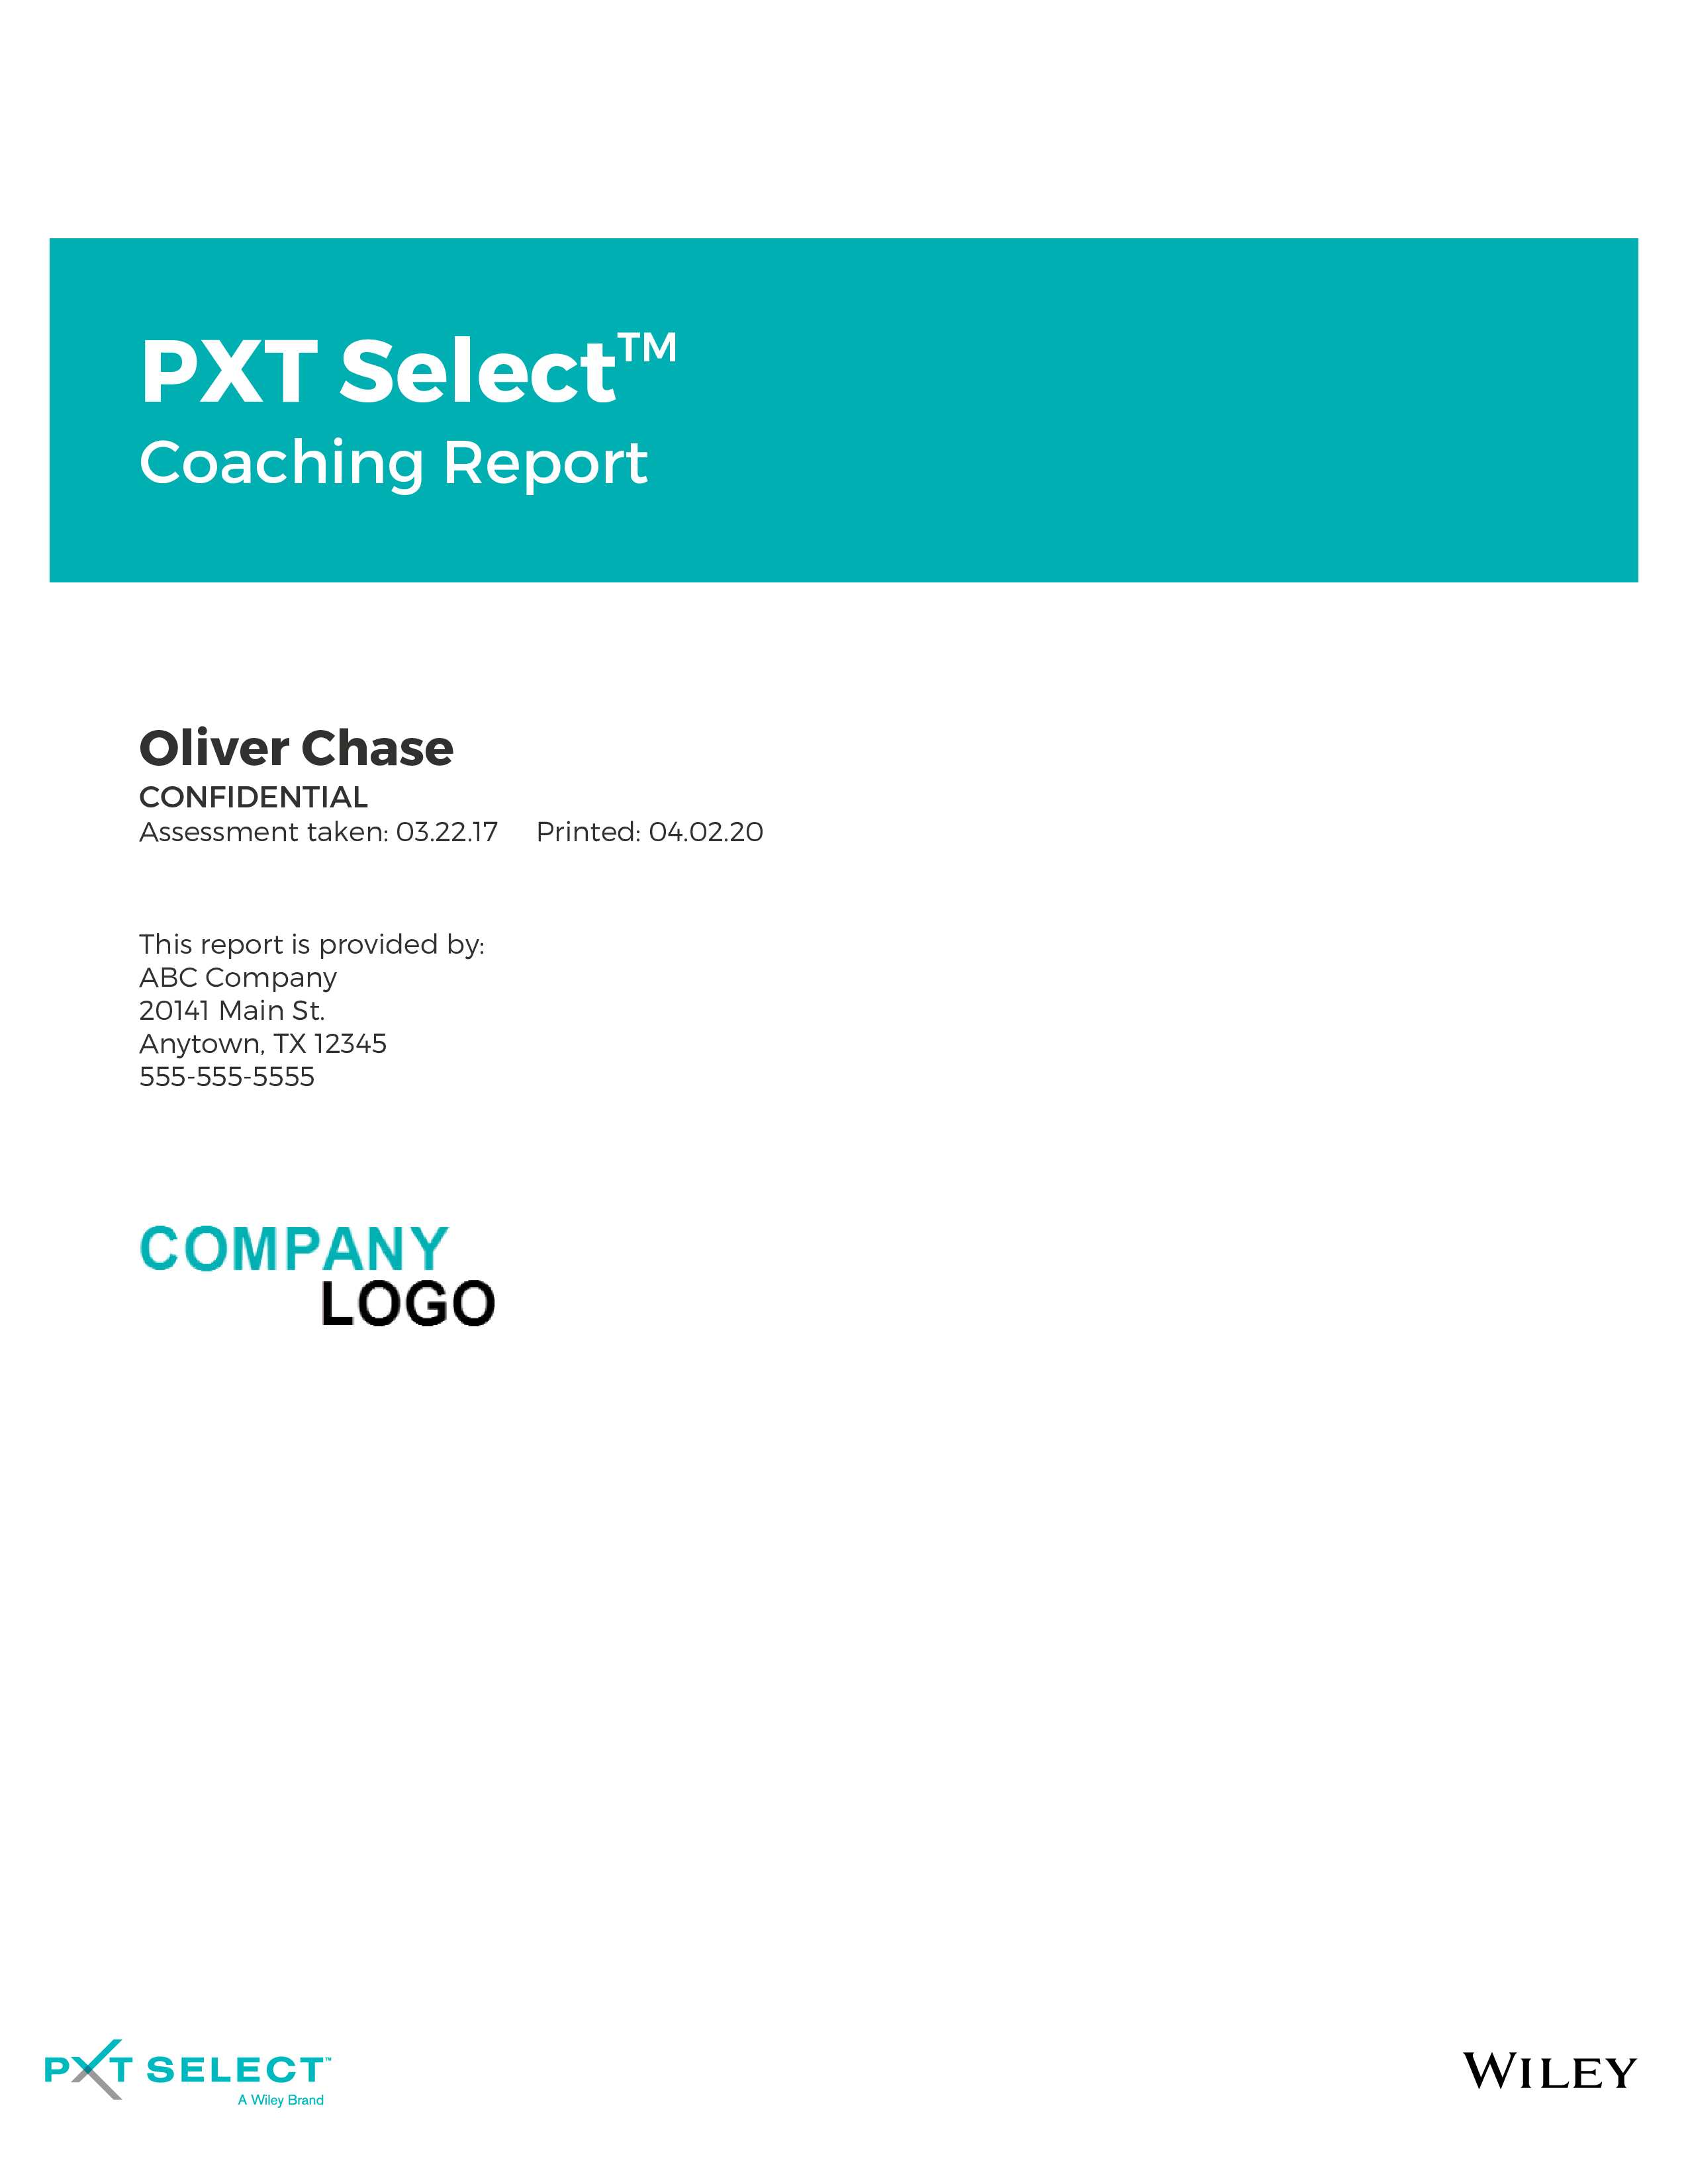 PXT Select Coaching Report November 2021